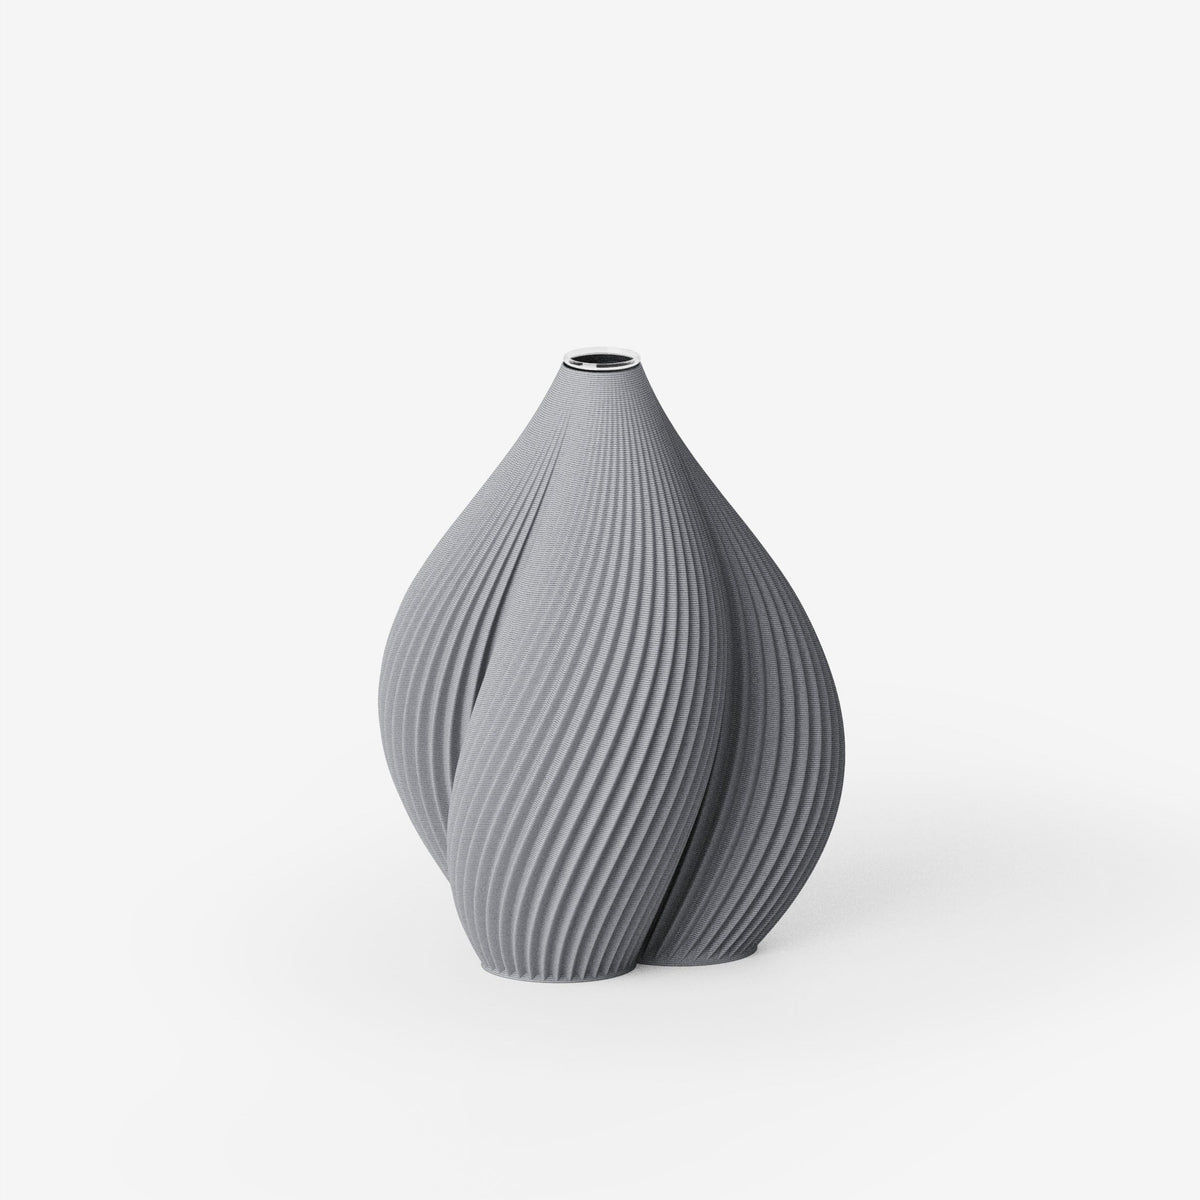 Vase Venus 1, stone grey